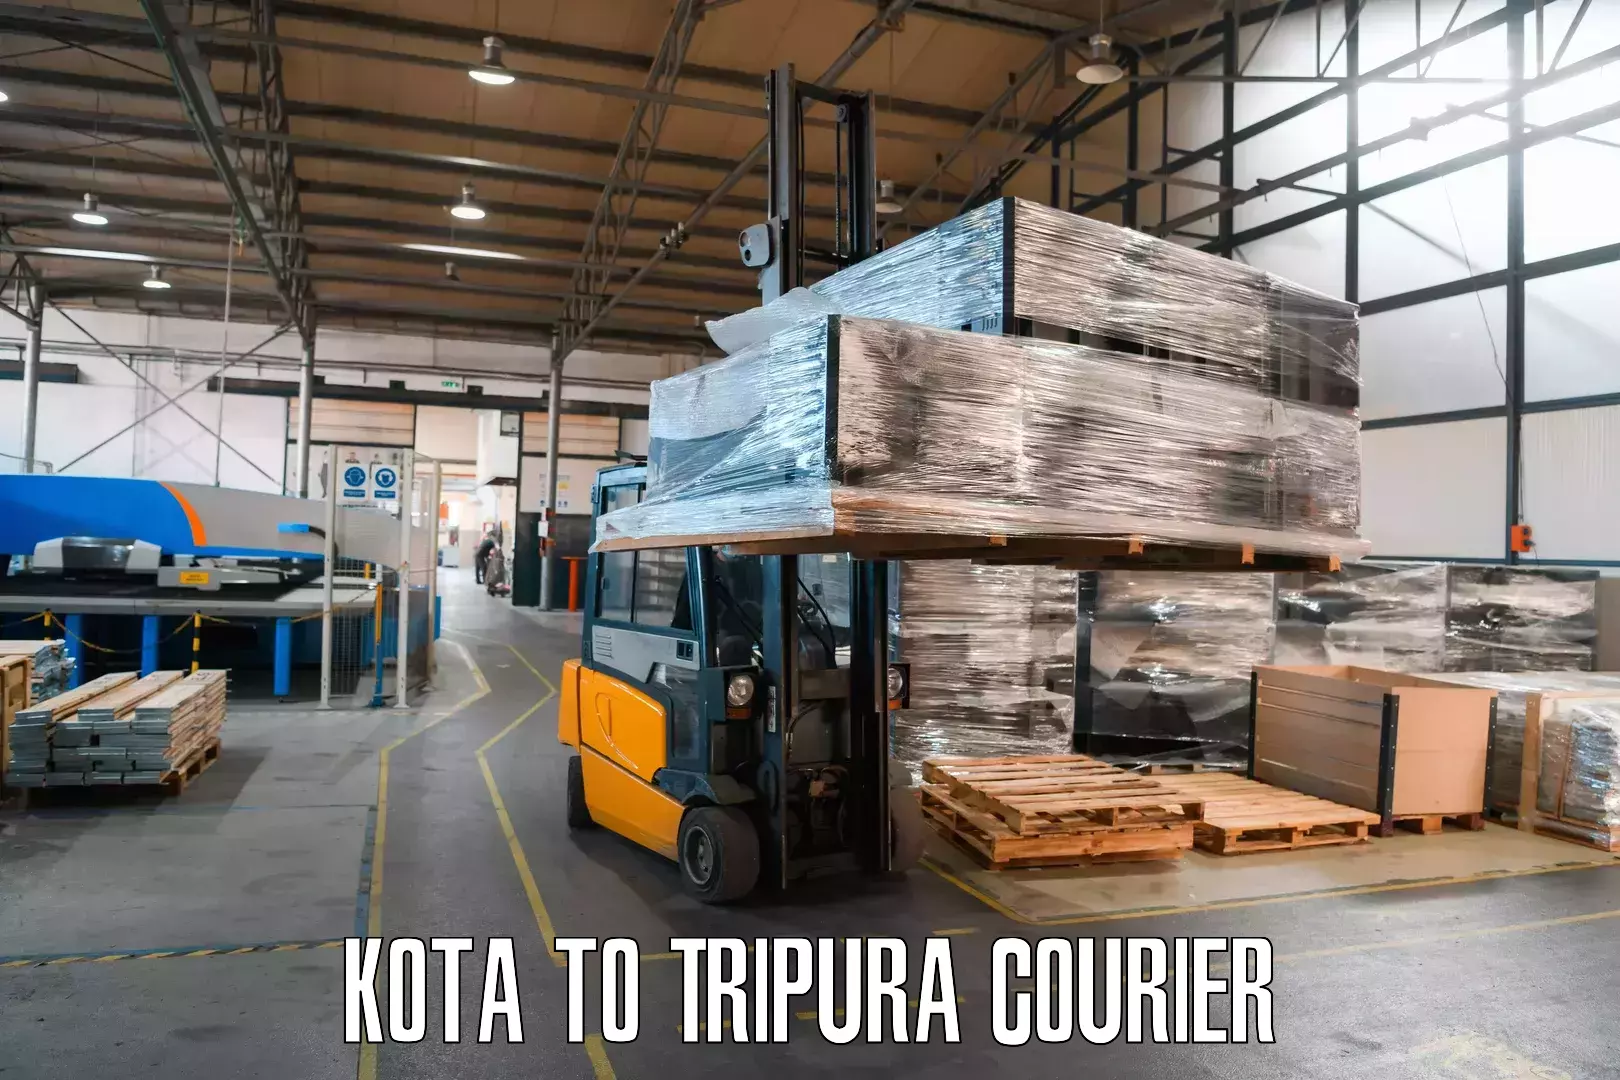 Express mail service Kota to South Tripura